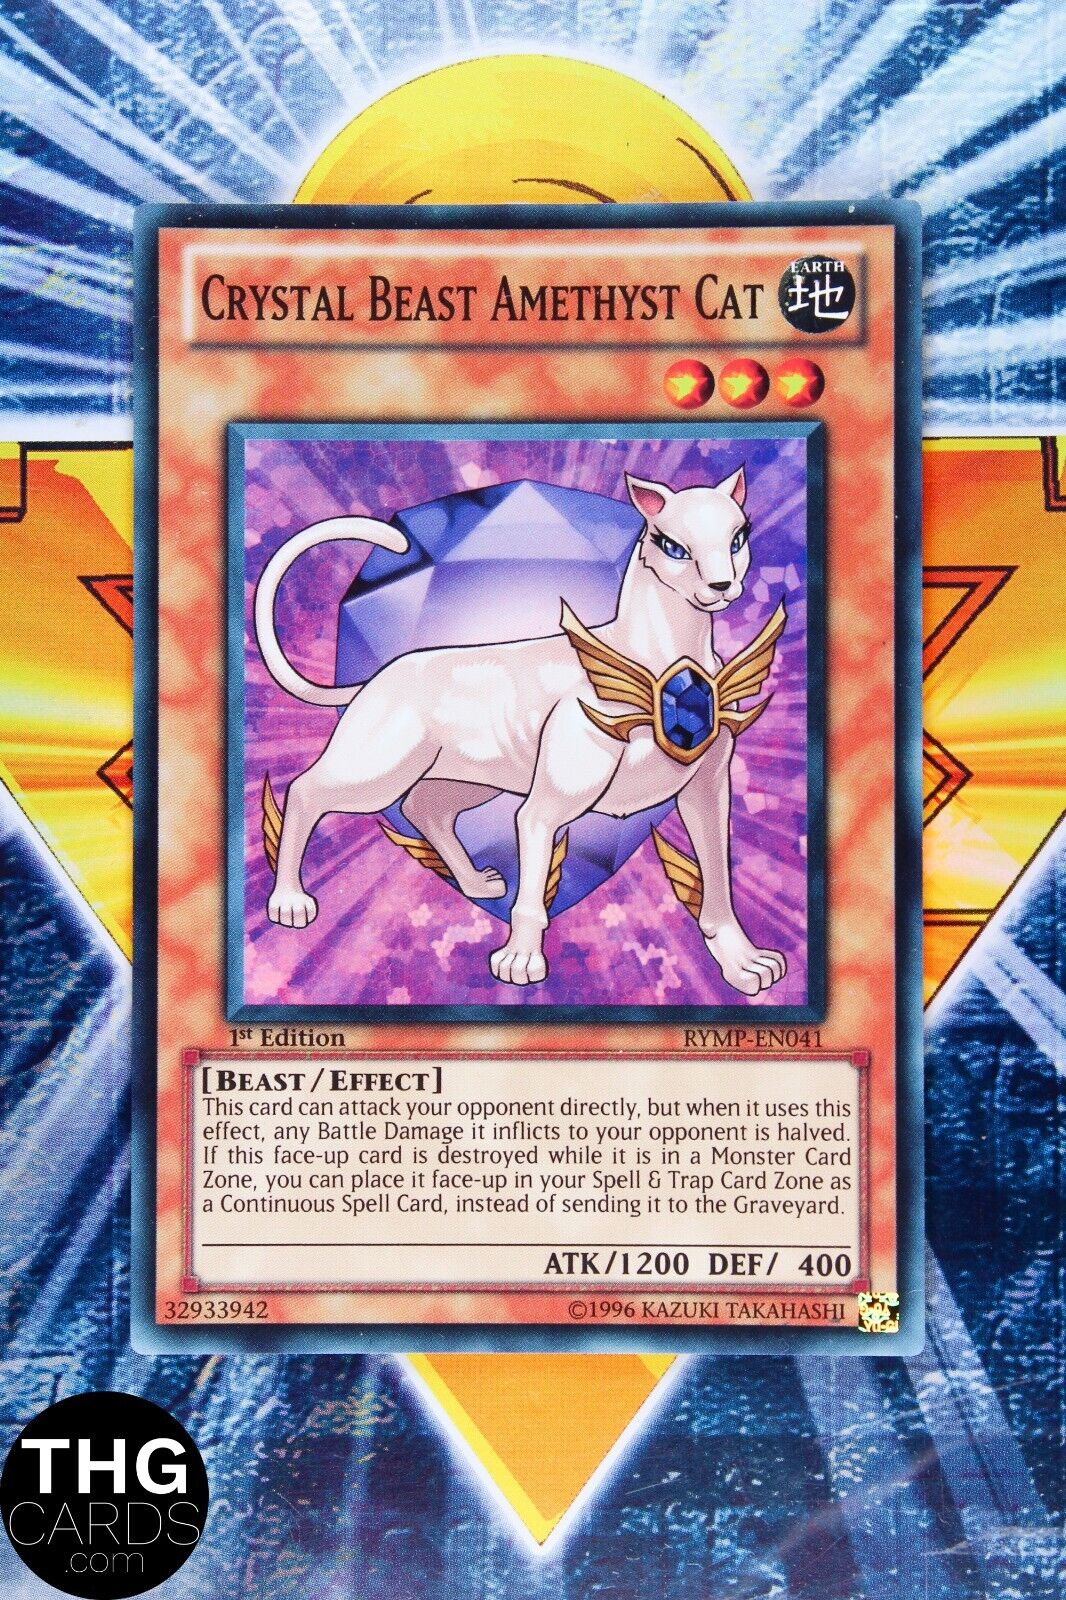 Crystal Beast Amethyst Cat RYMP-EN041 1st Edition Super Rare Yugioh Card